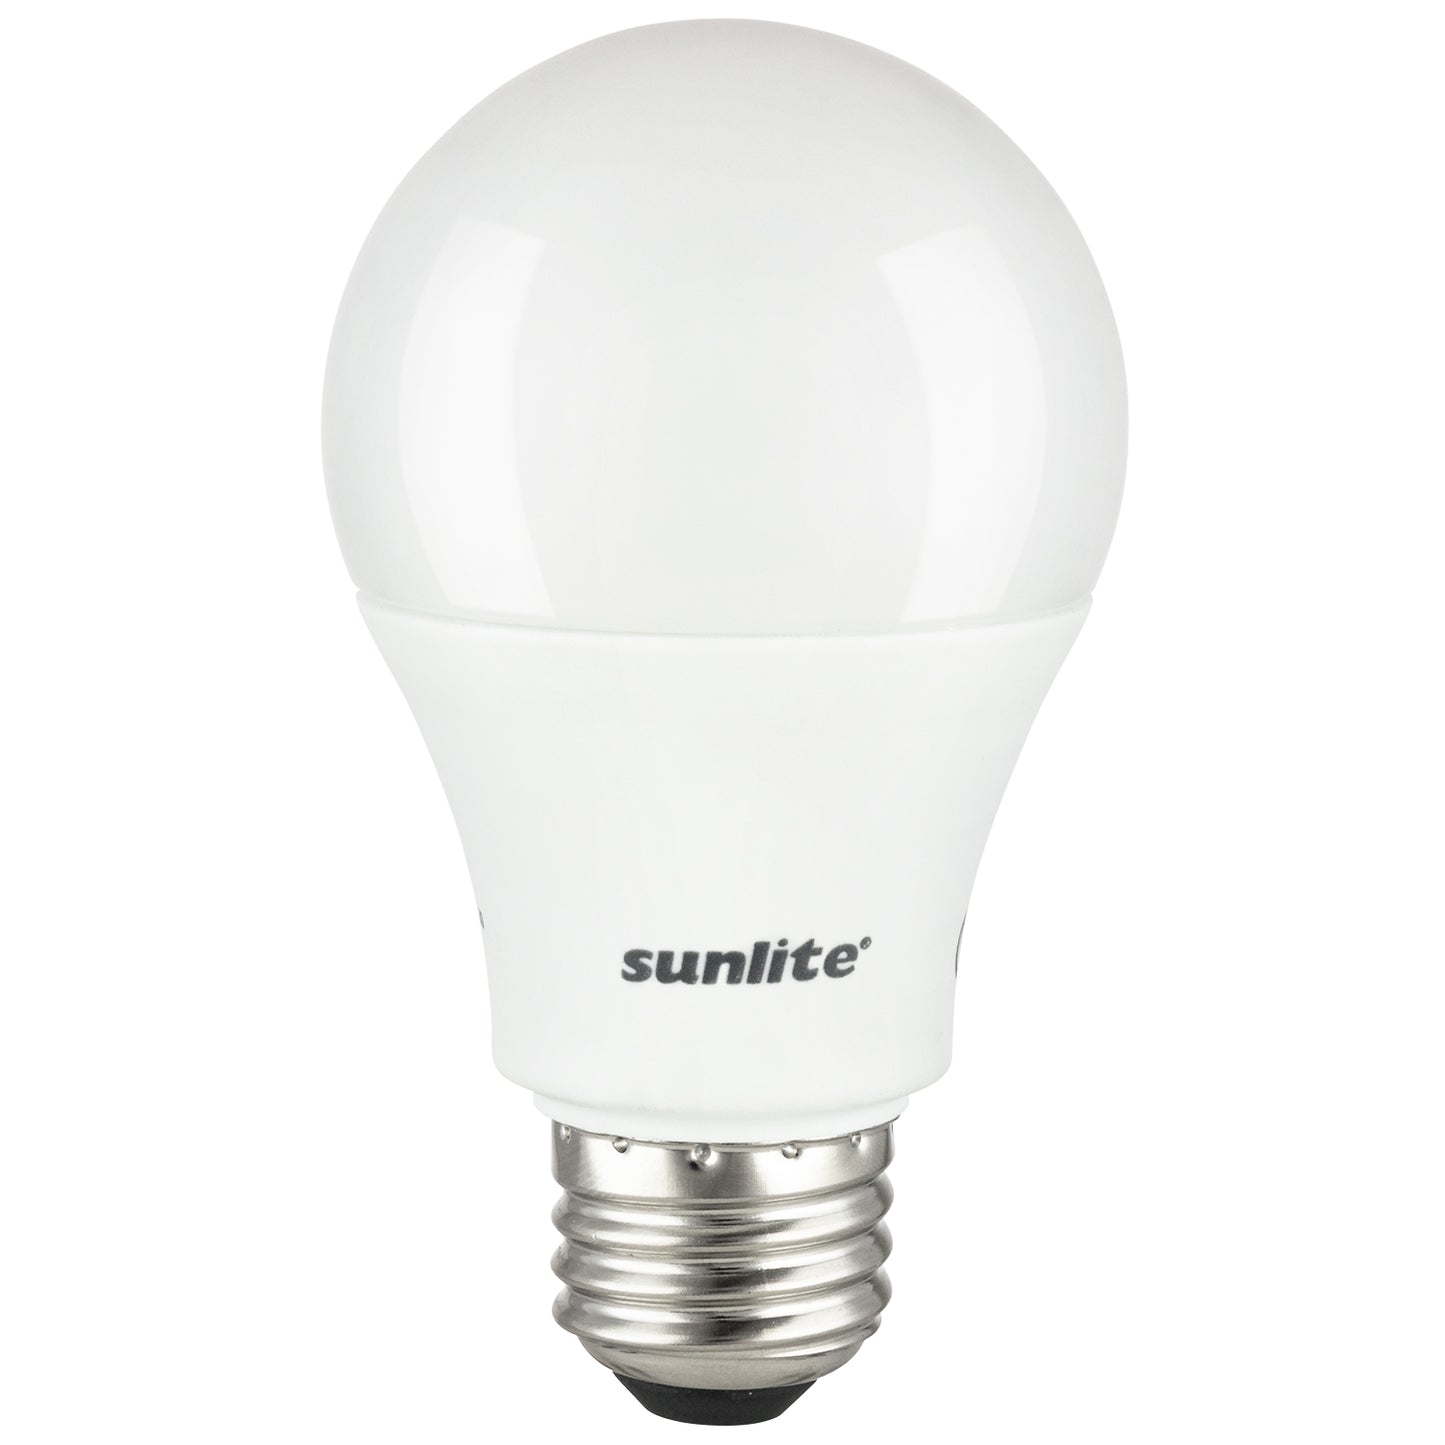 Sunlite 80693-SU LED A19 Standard Light Bulb 9 Watts (60W Equivalent), 800 Lumens, Medium Base (E26), Dimmable, UL Listed, Energy Star, 50K-Super White, 1 Pack